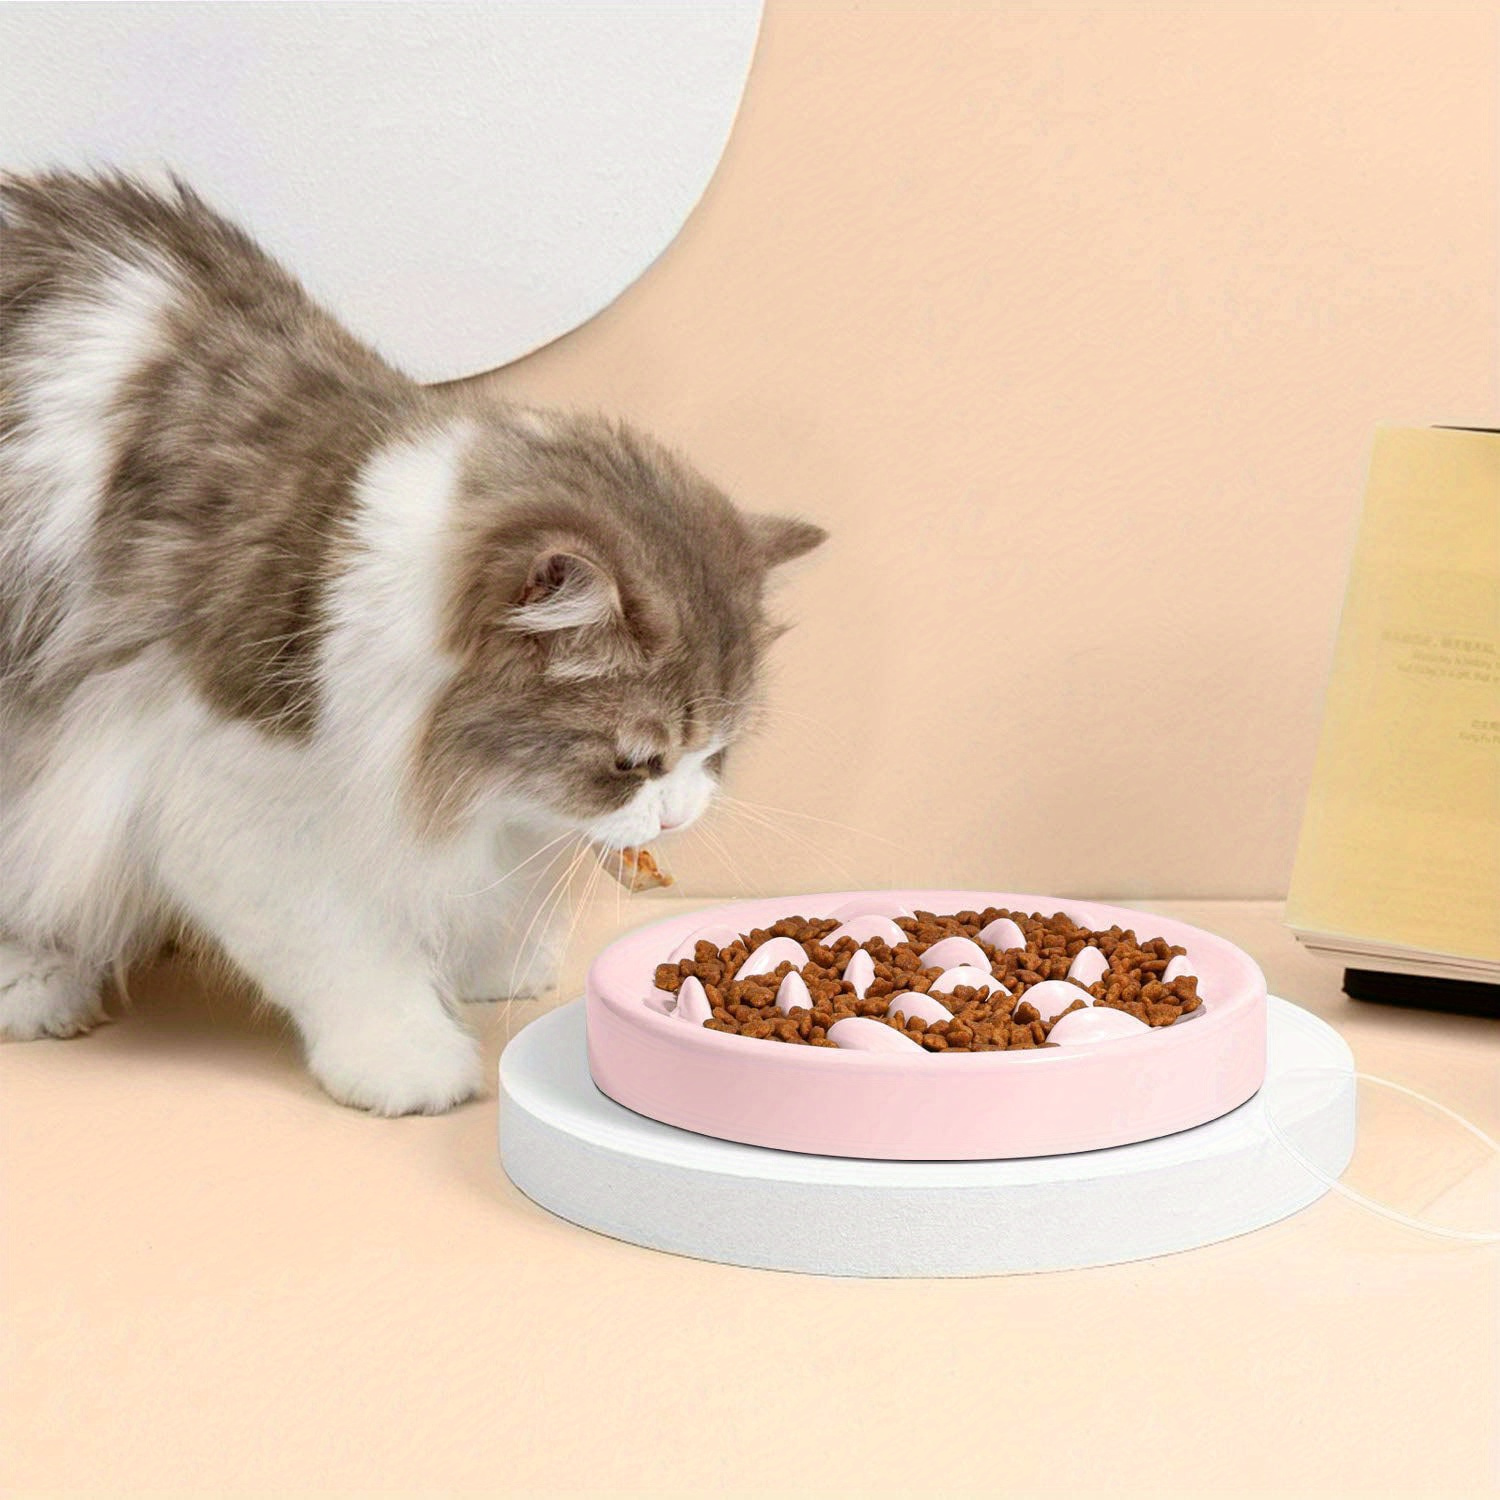 Pet Food Slow Feeder Lick Plate